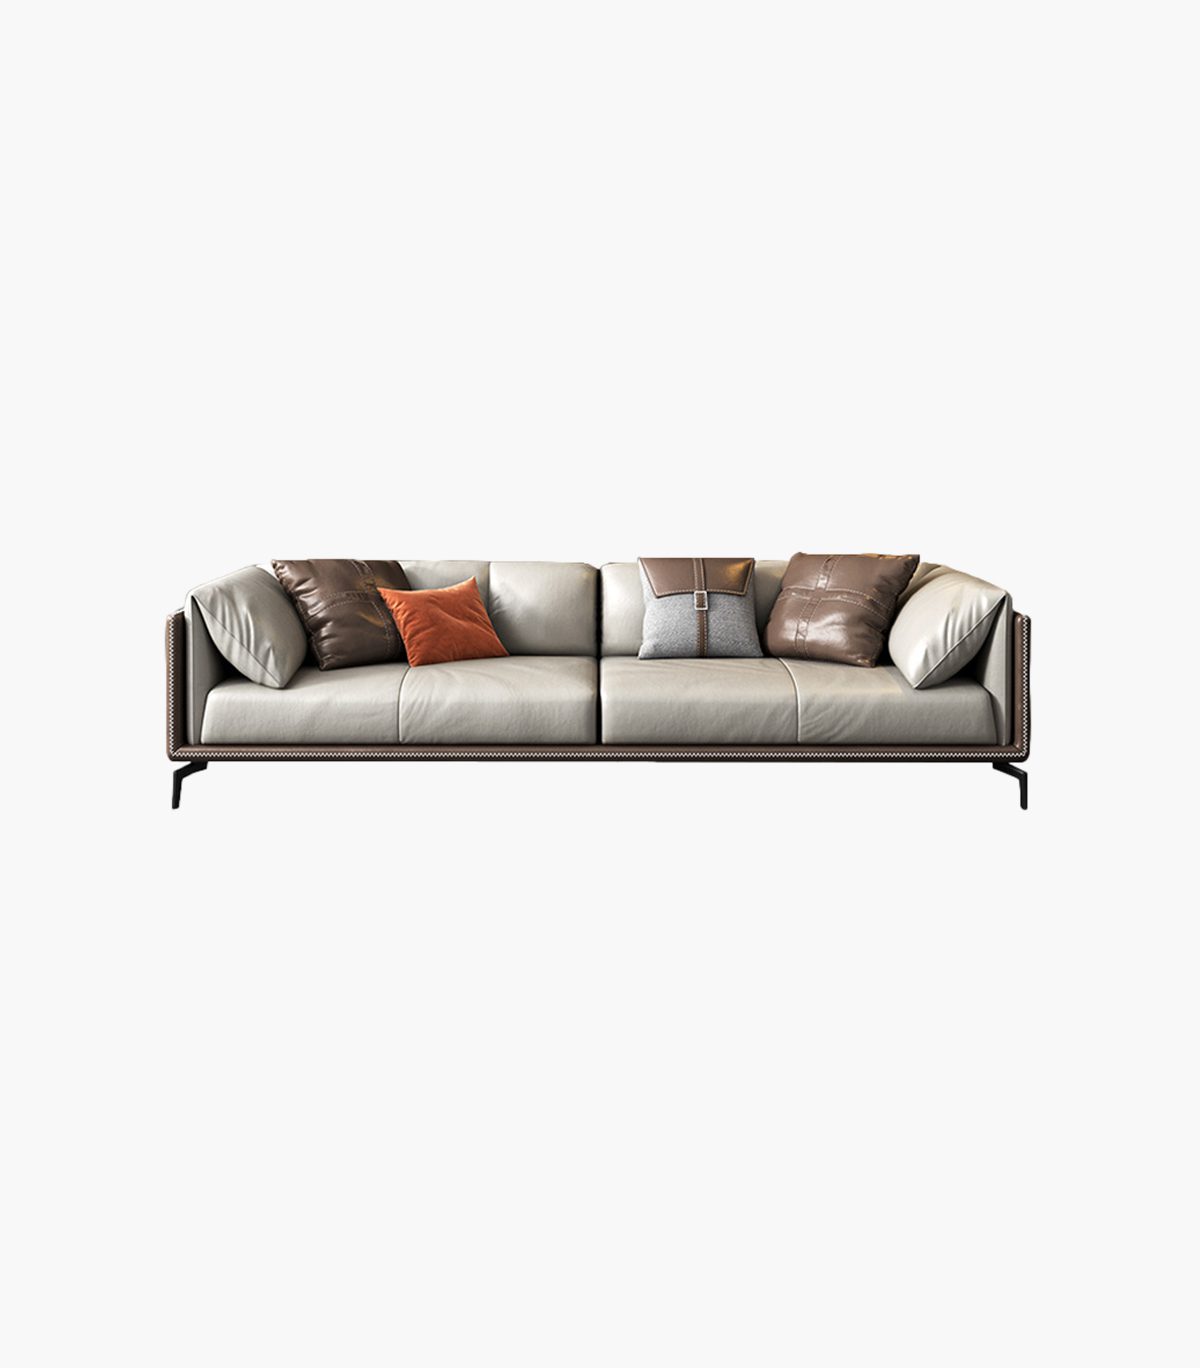 MITCHELL WRIGHT Sofa 2-Seater